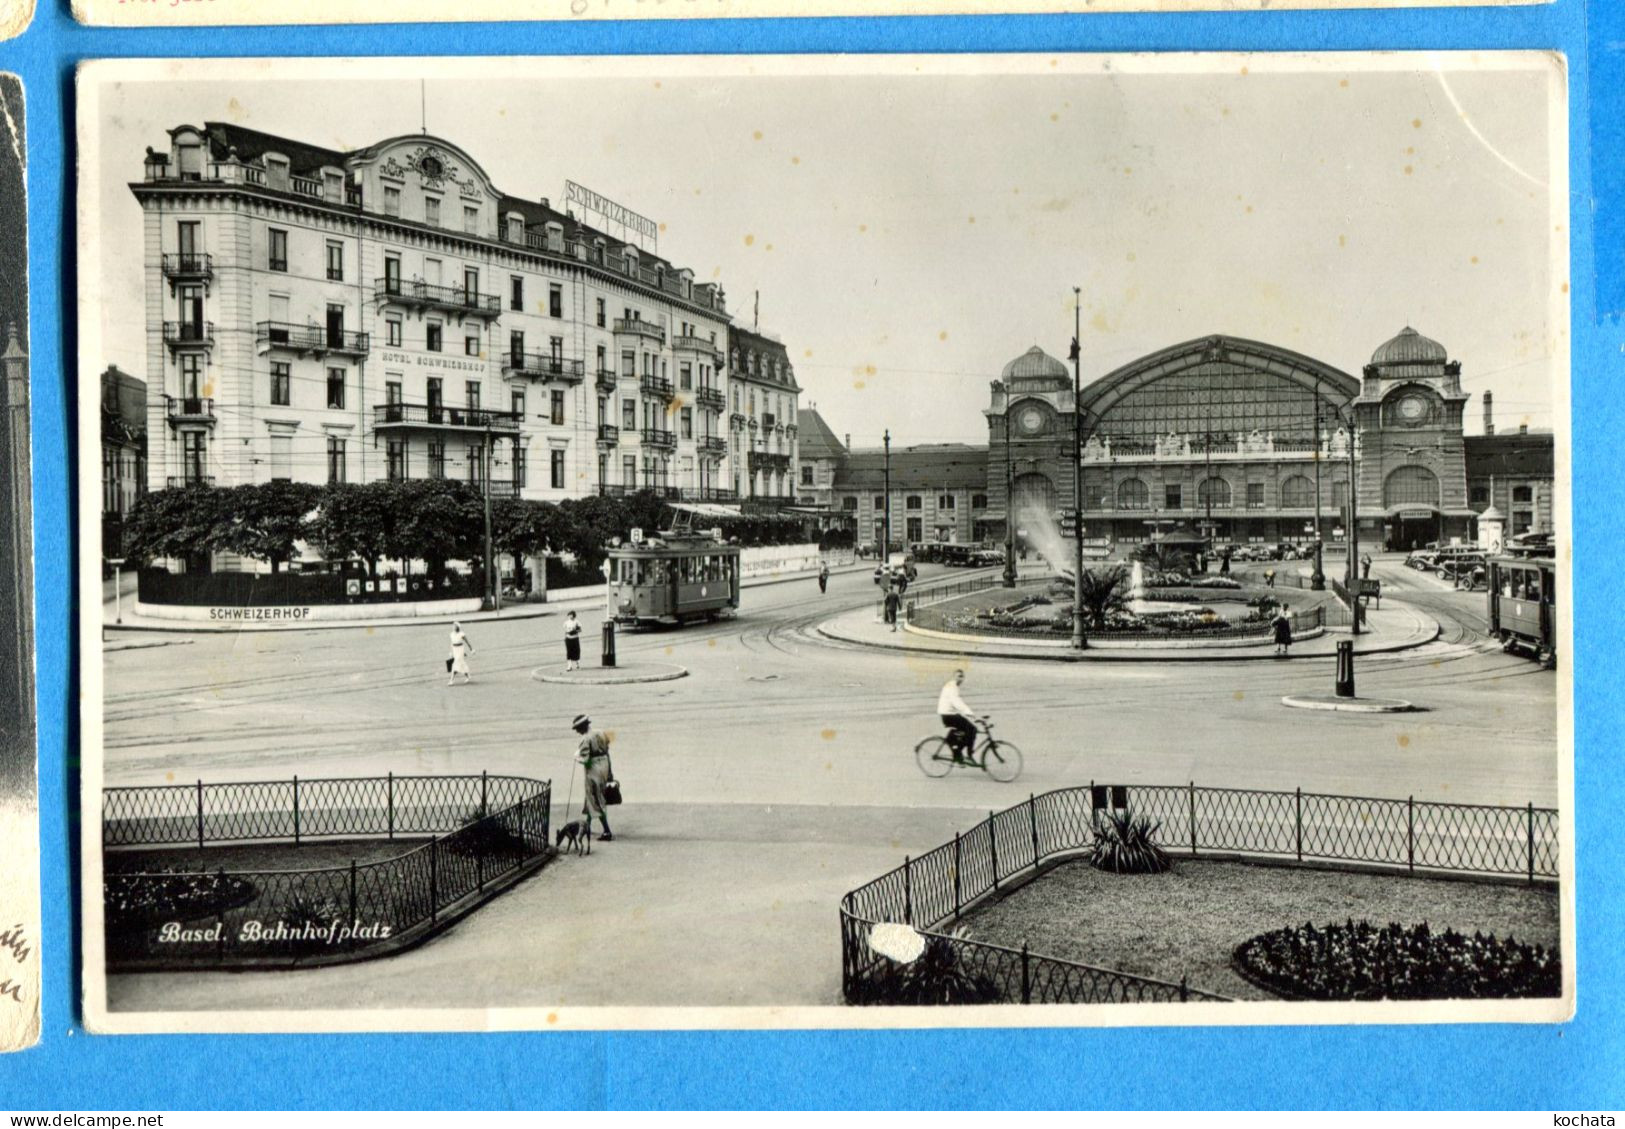 VIX122, Basel, Bahnhofplatz, Animée, Place De La Gare, Schweizerhof, Tram, 7204, Circulée 1935 - Basel